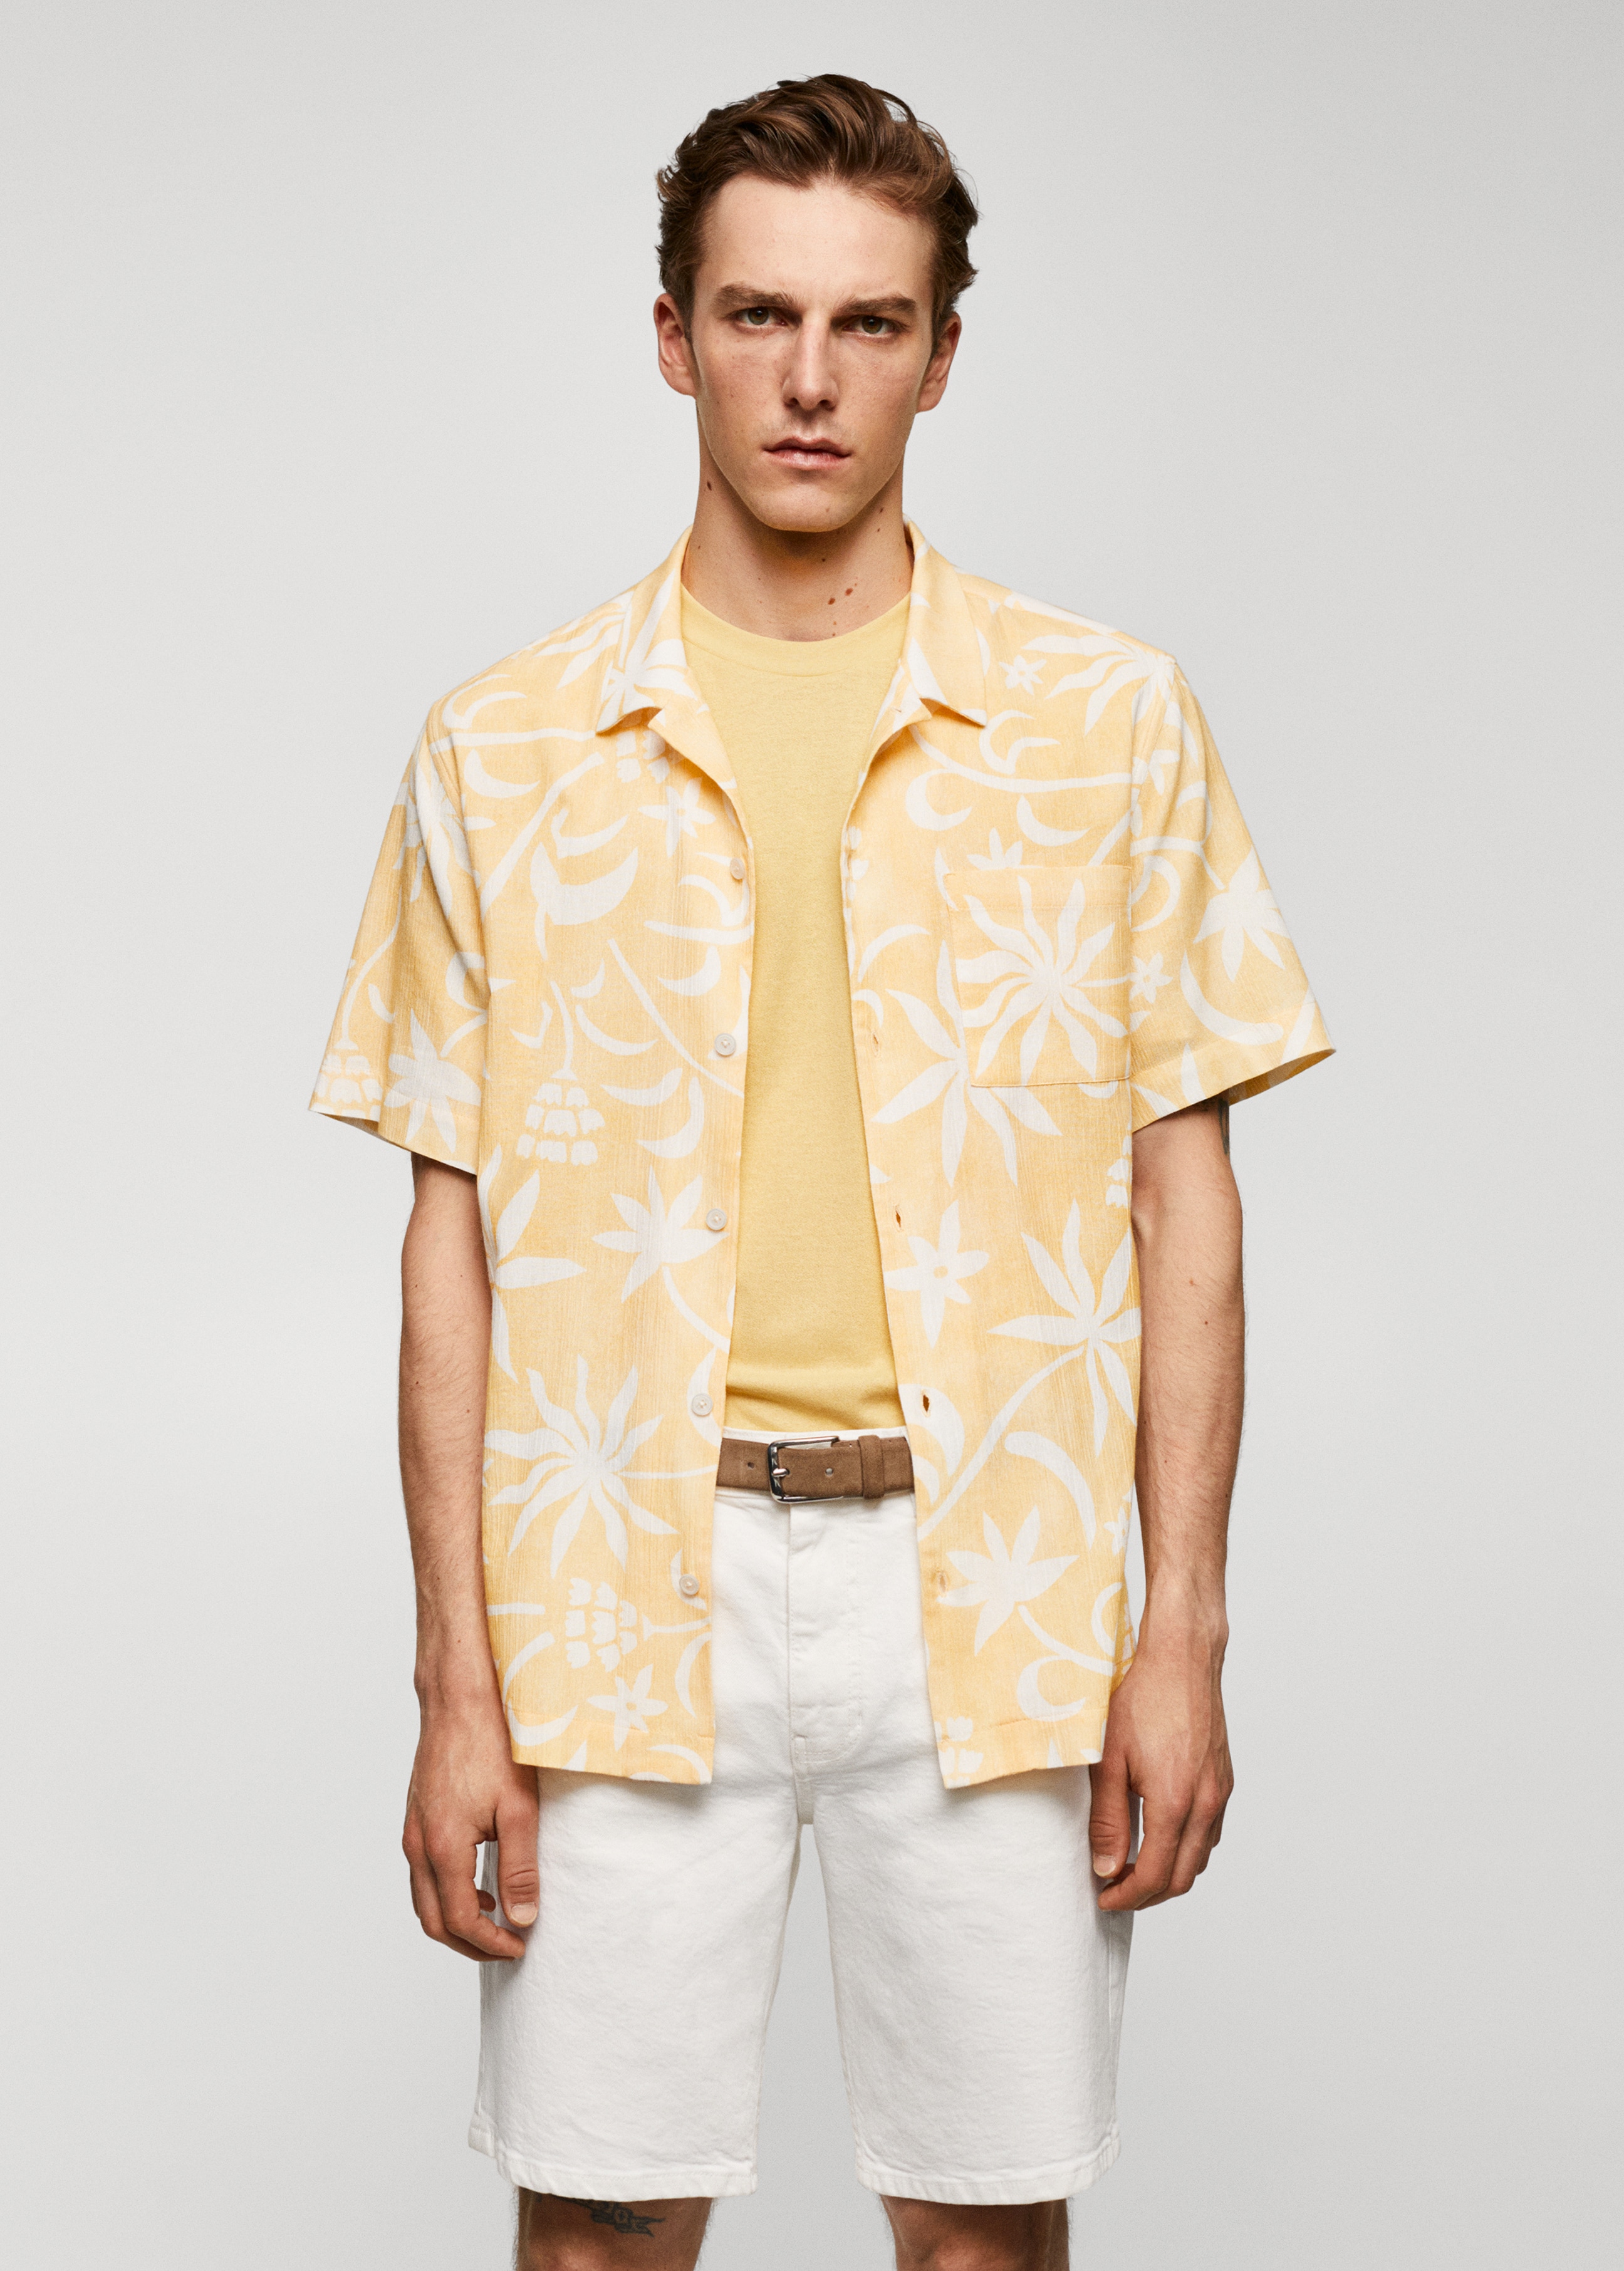 100% cotton Hawaiian-print shirt - Medium plane